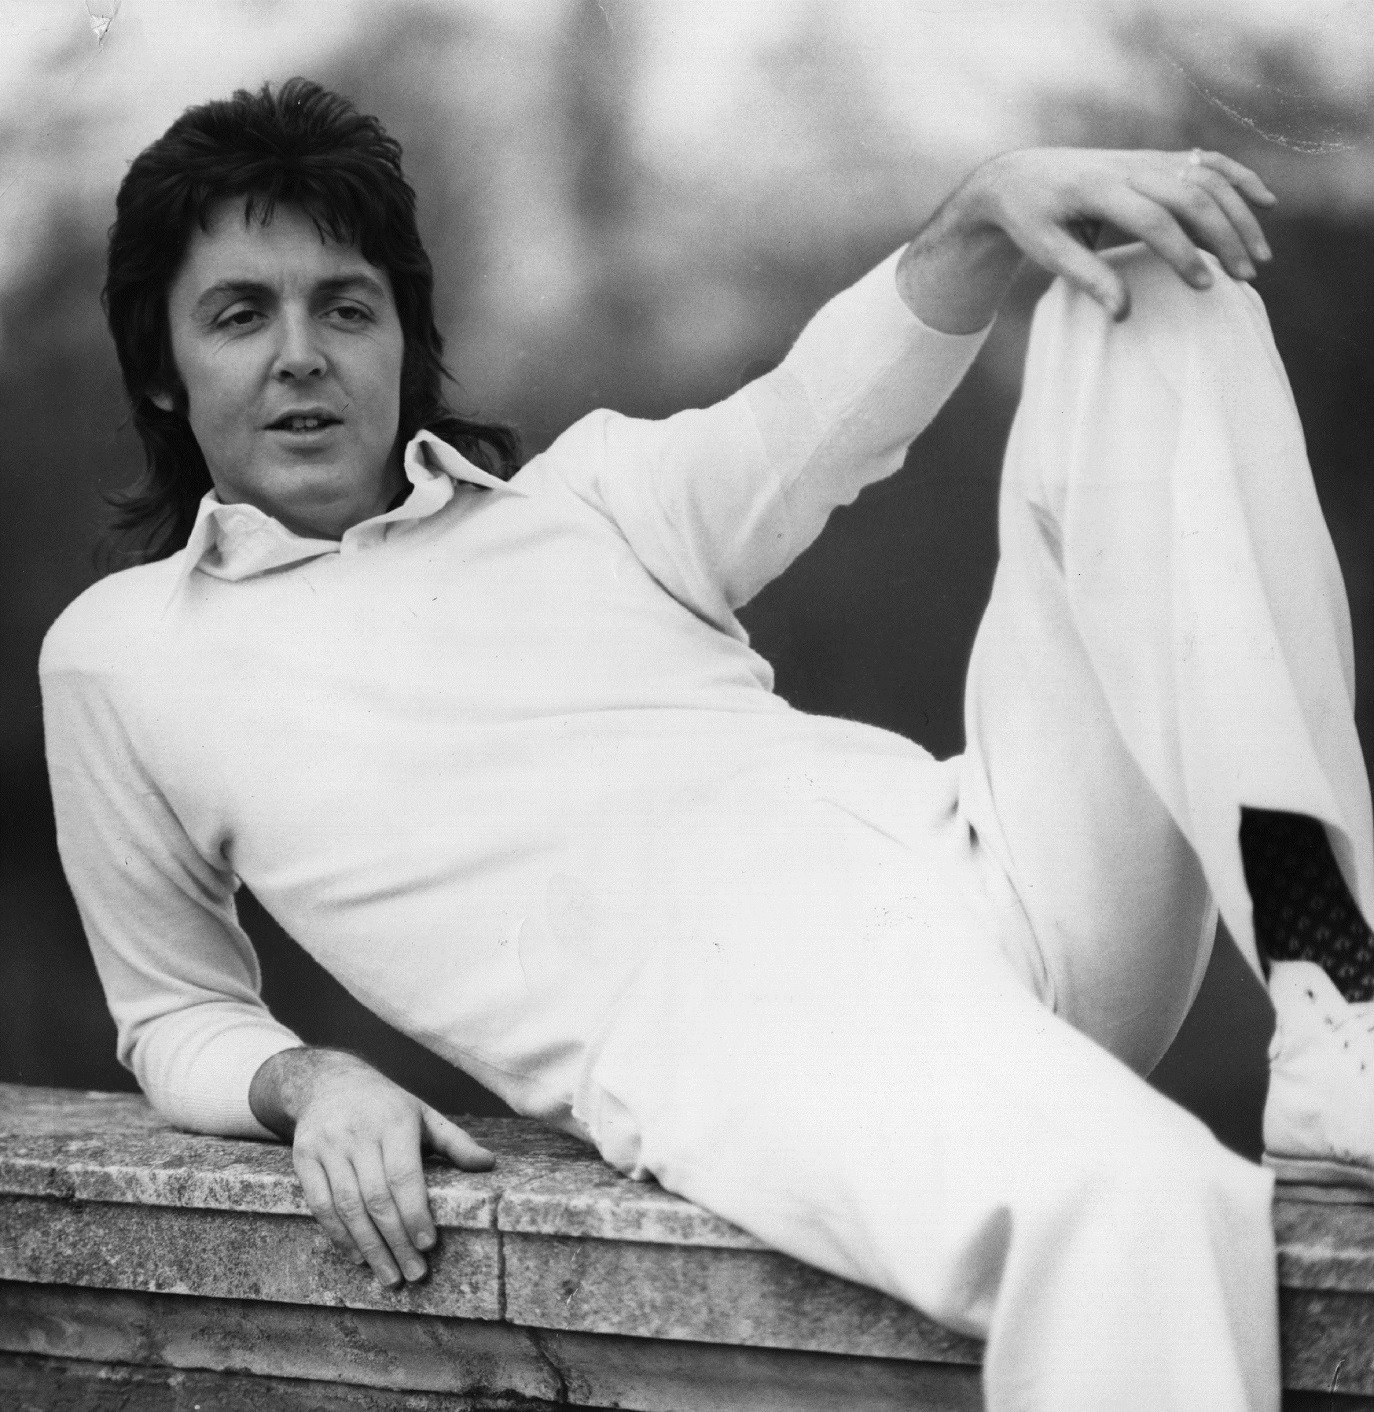 Paul McCartney sporting a fantastic mullet.